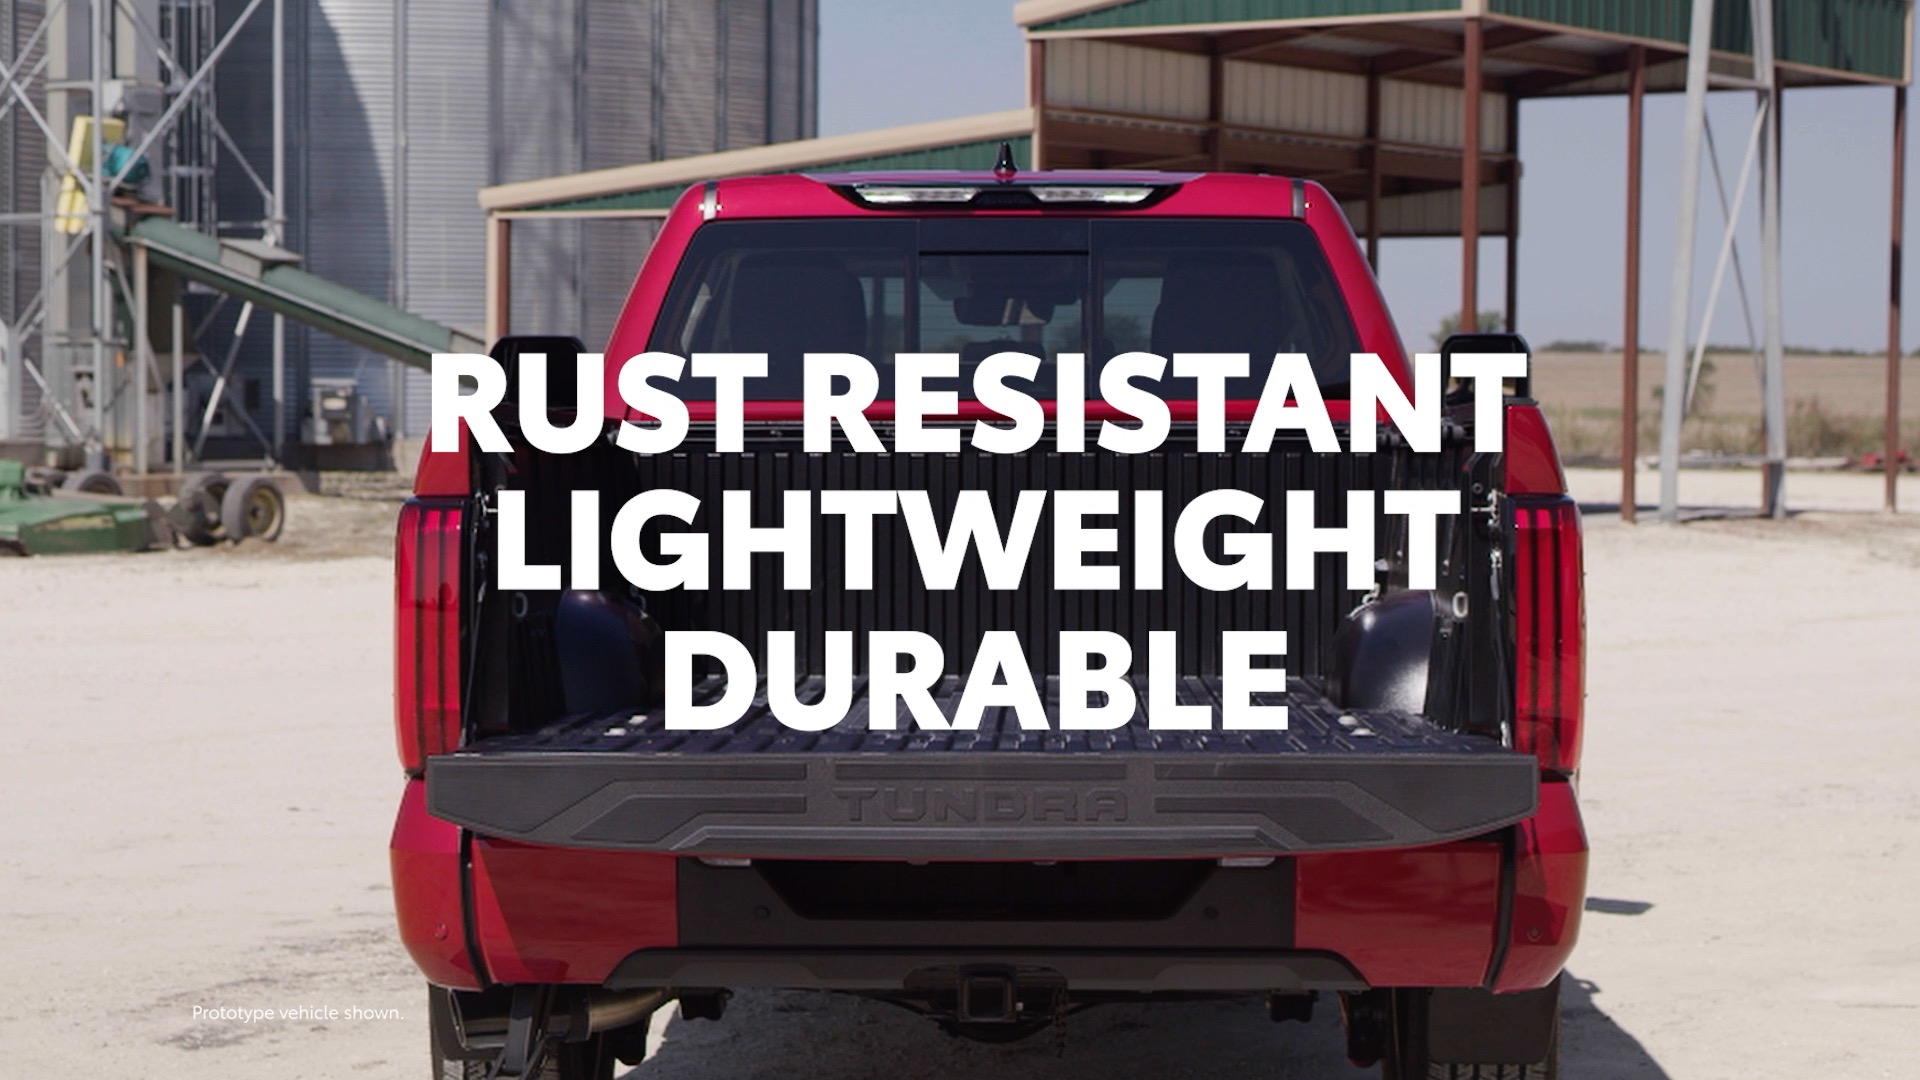 Toyota Tundra Truck Bed Durability Test | 過酷なYouTube企画 | 1st ノミネート作品紹介